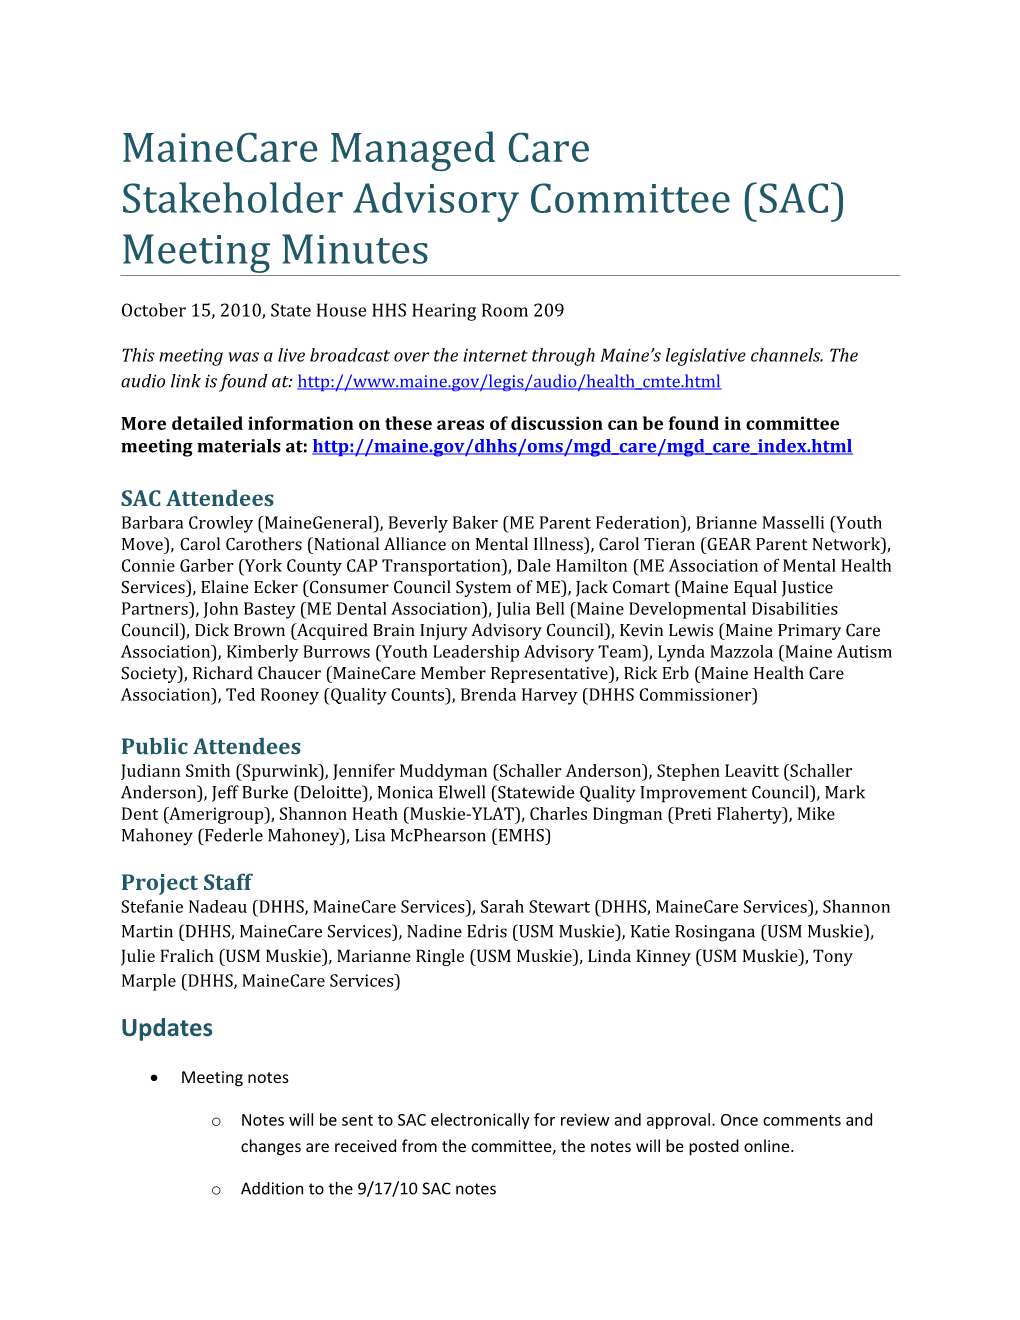 Stakeholder Advisory Committee (SAC)